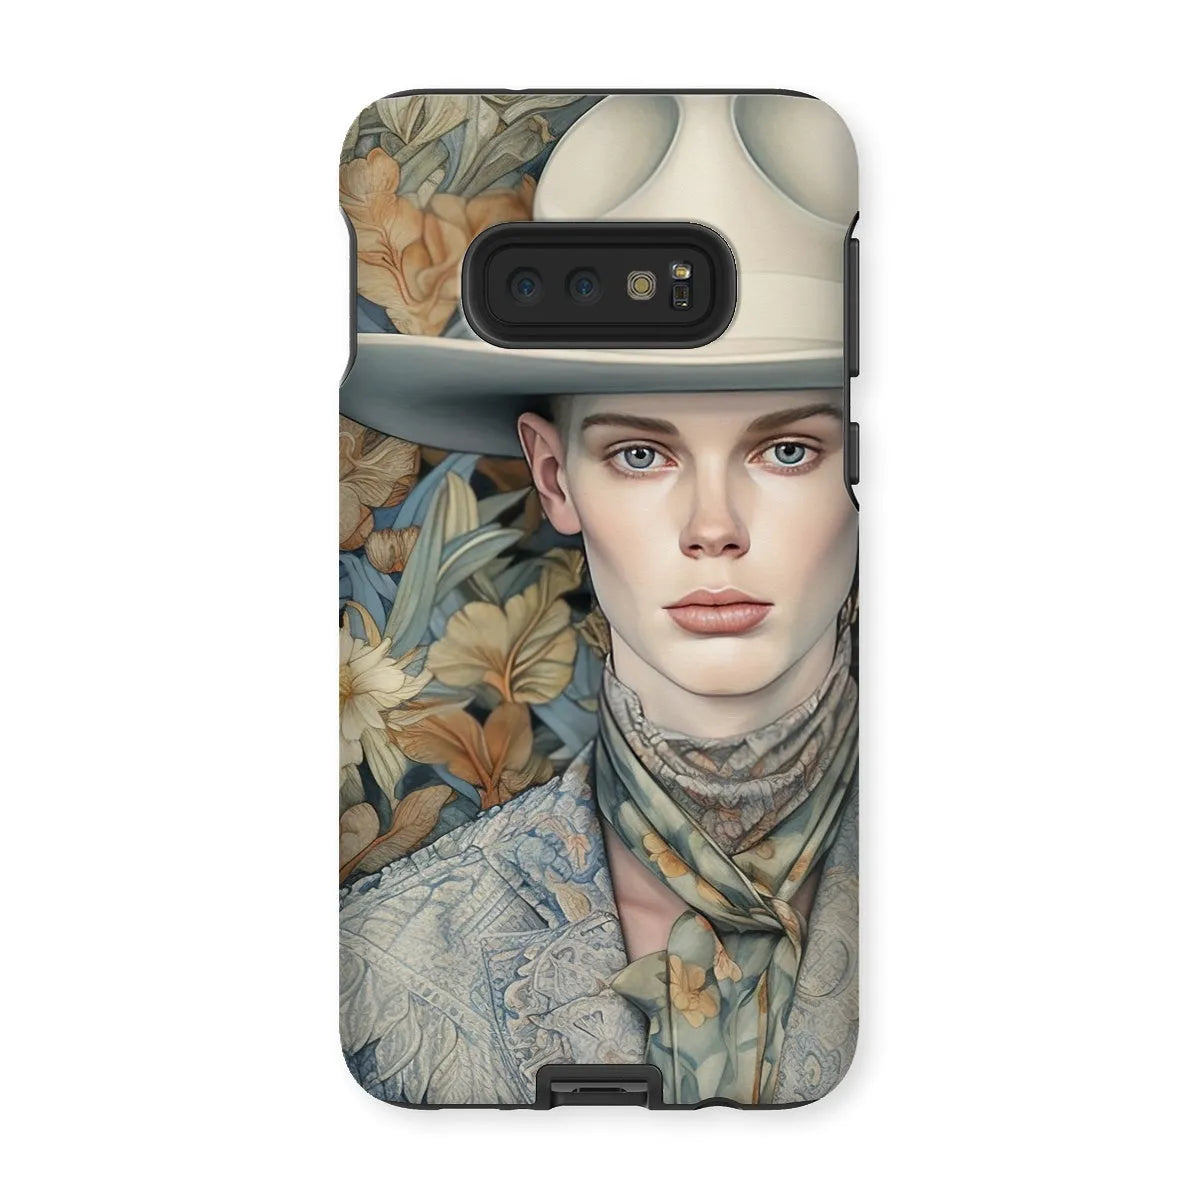 Jasper The Gay Cowboy - Dandy Gay Aesthetic Art Phone Case - Samsung Galaxy S10e / Matte - Mobile Phone Cases